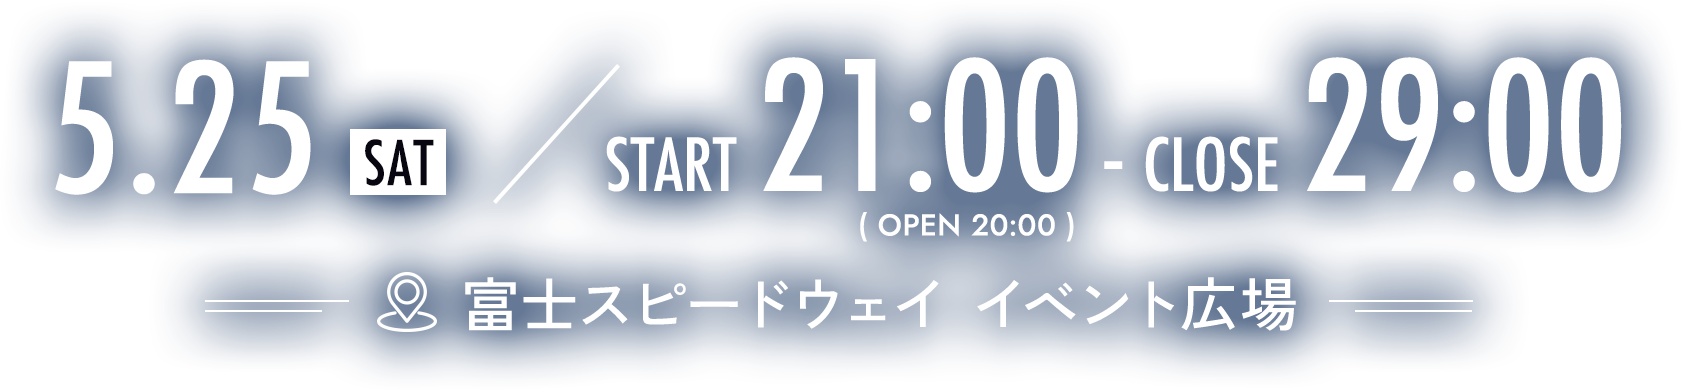 5.25 SAT START 21:00 - CLOSE 29:00 (OPEN 20:00) 富士スピードウェイ イベント広場